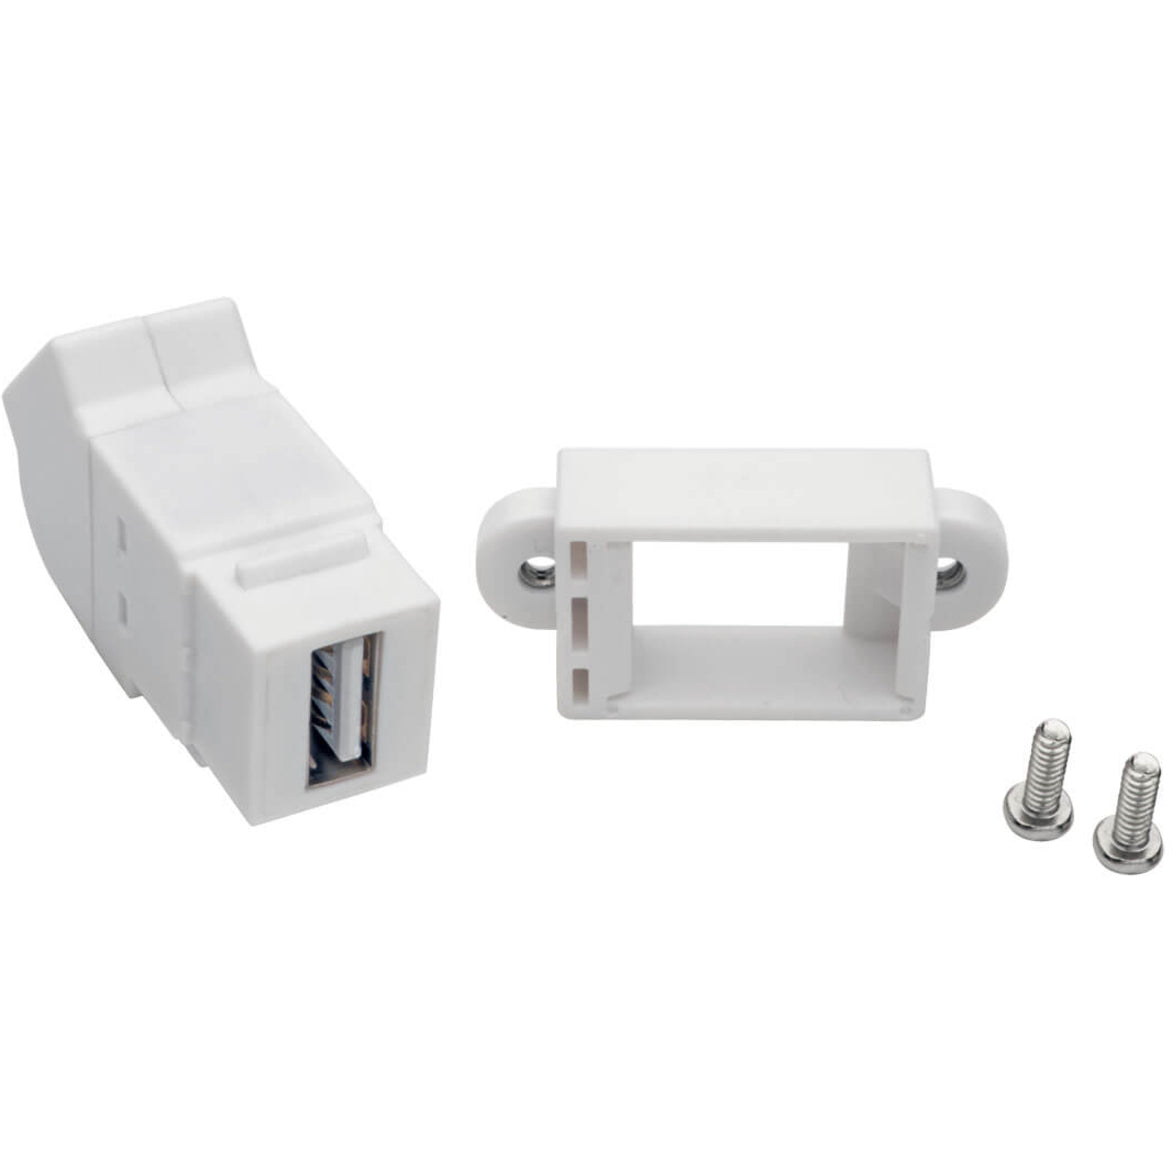 Tripp Lite U060-000-KPA-WH USB 2.0 オールインワン キーストーン/パネル取り付け用 アングル型カプラー（女性/女性） ホワイト ブランド名: トリップ・ライト